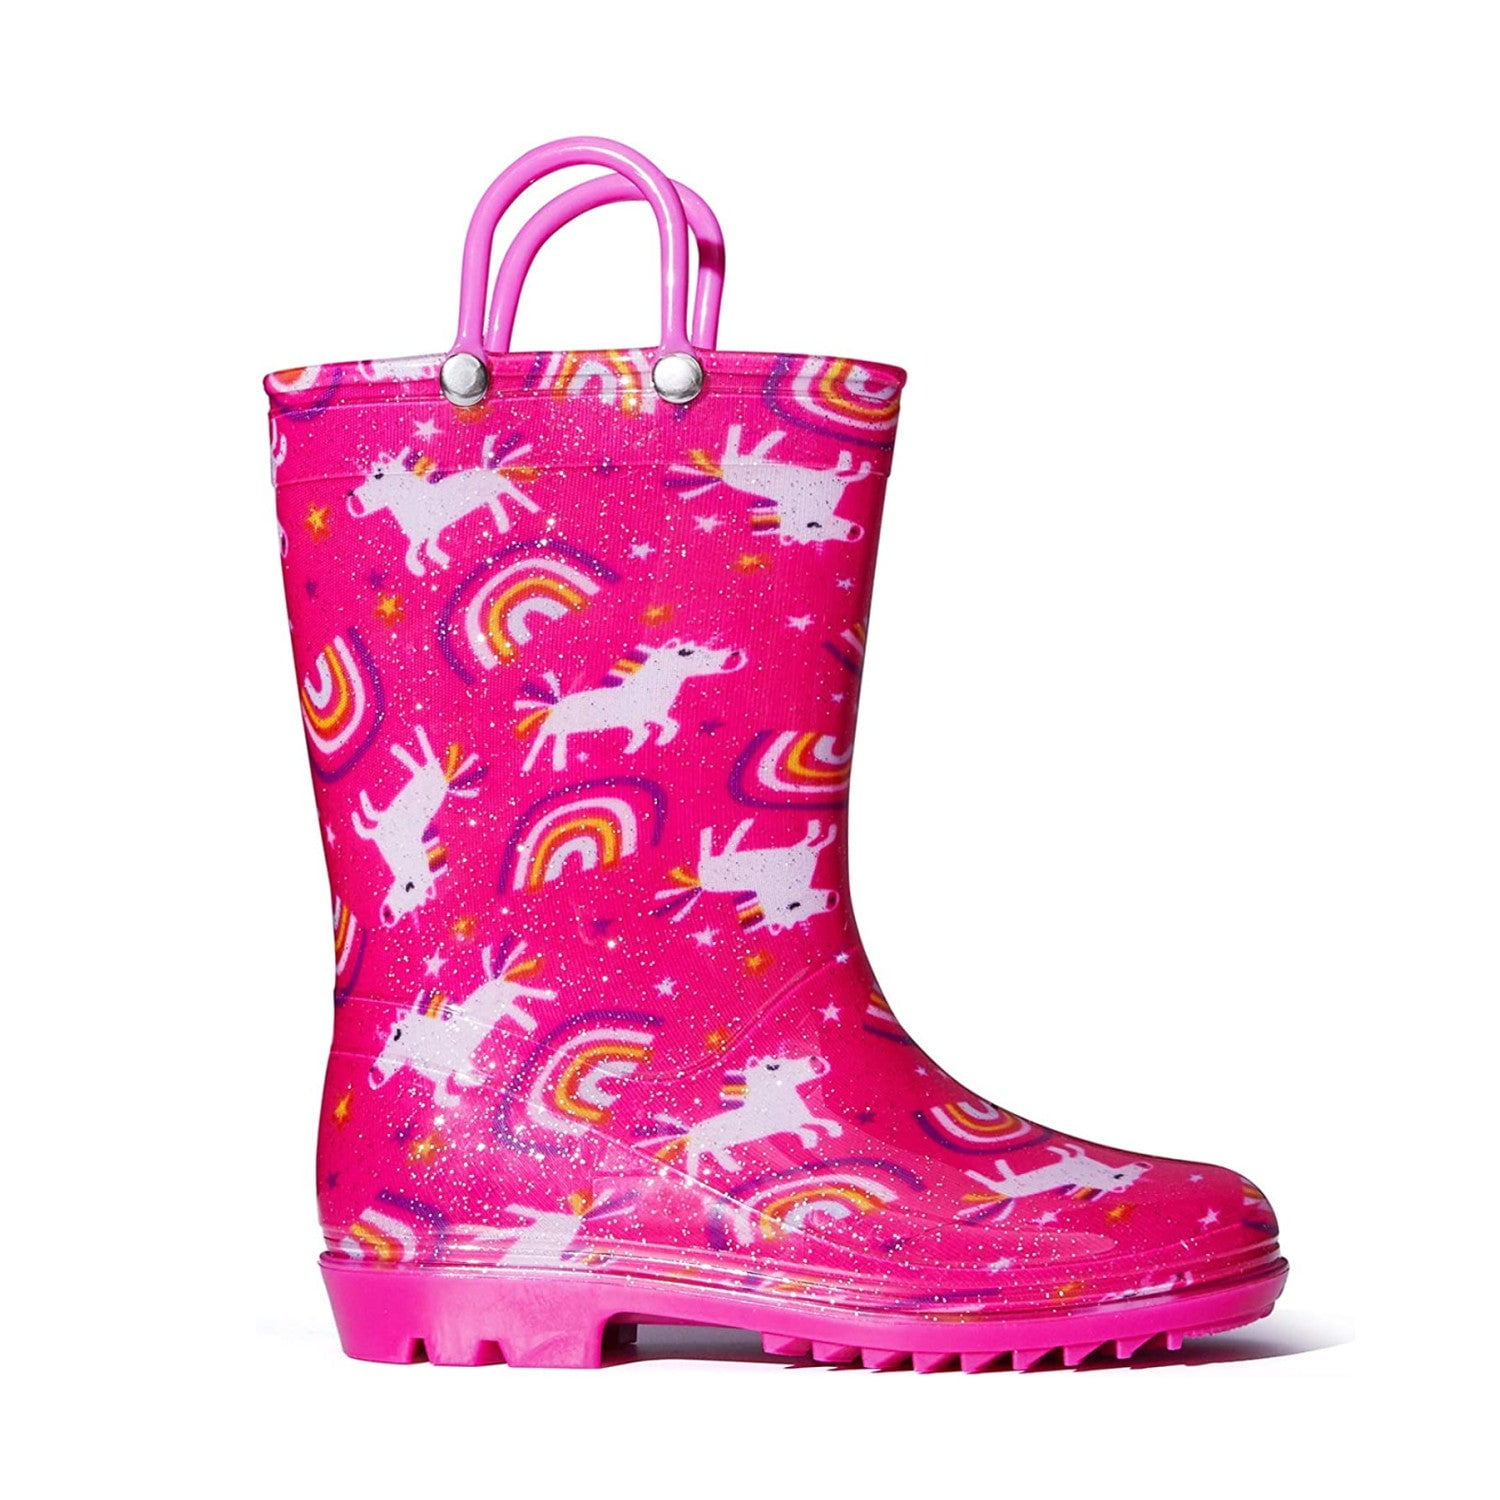 SHOFORT Kids Boys Girls Rain Boots with Easy-on Handles Rainboots Toddler/Little Kid/Big Kid 